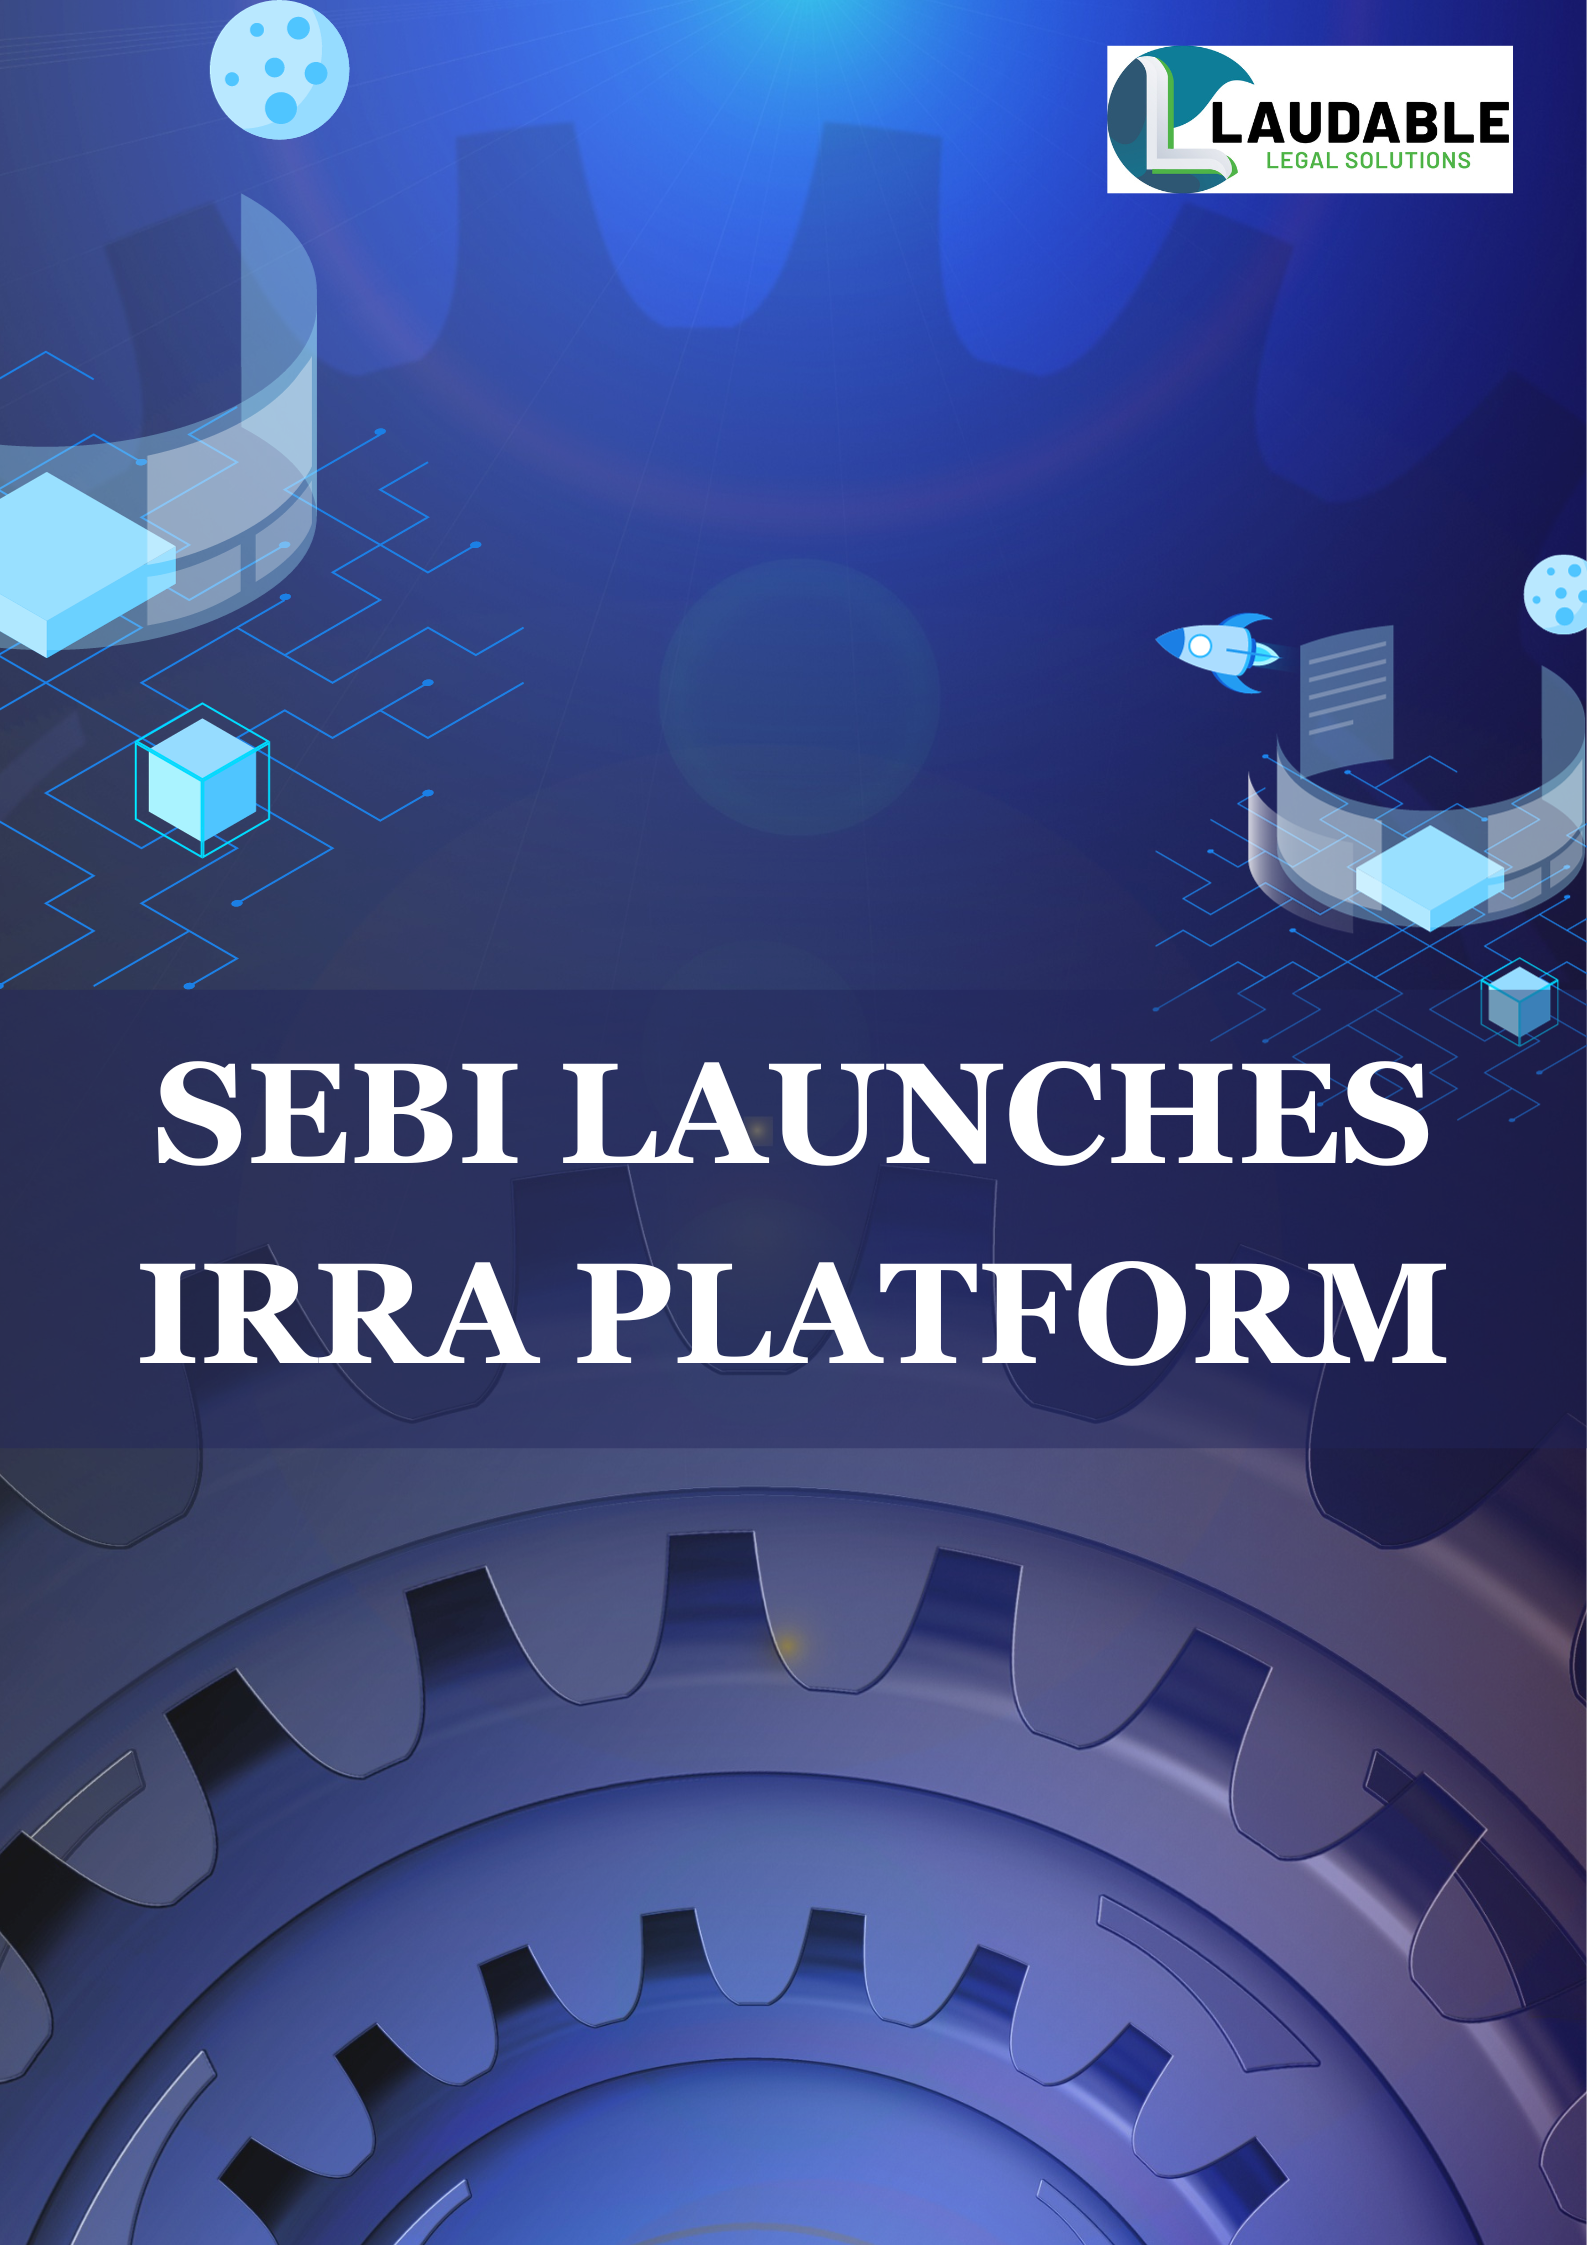 SEBI Launches IRRA Platform